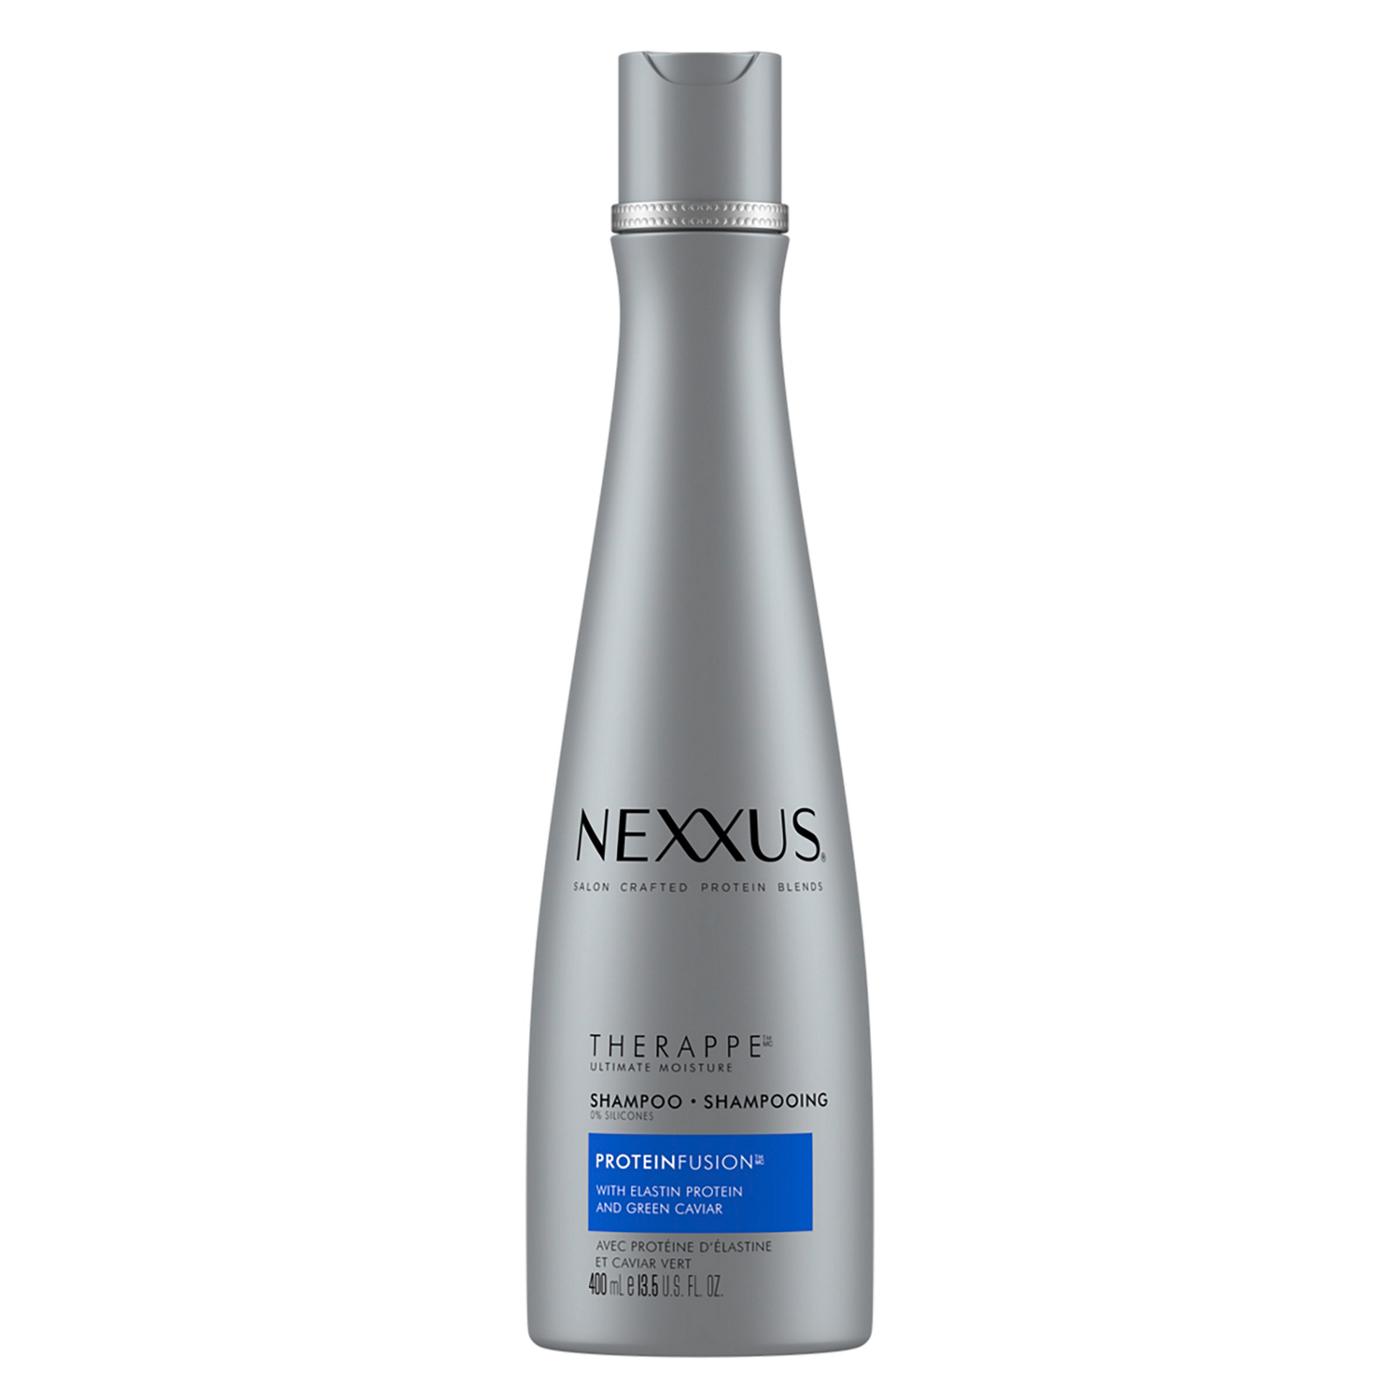 Nexxus Therappe Ultimate Moisture Shampoo; image 1 of 10